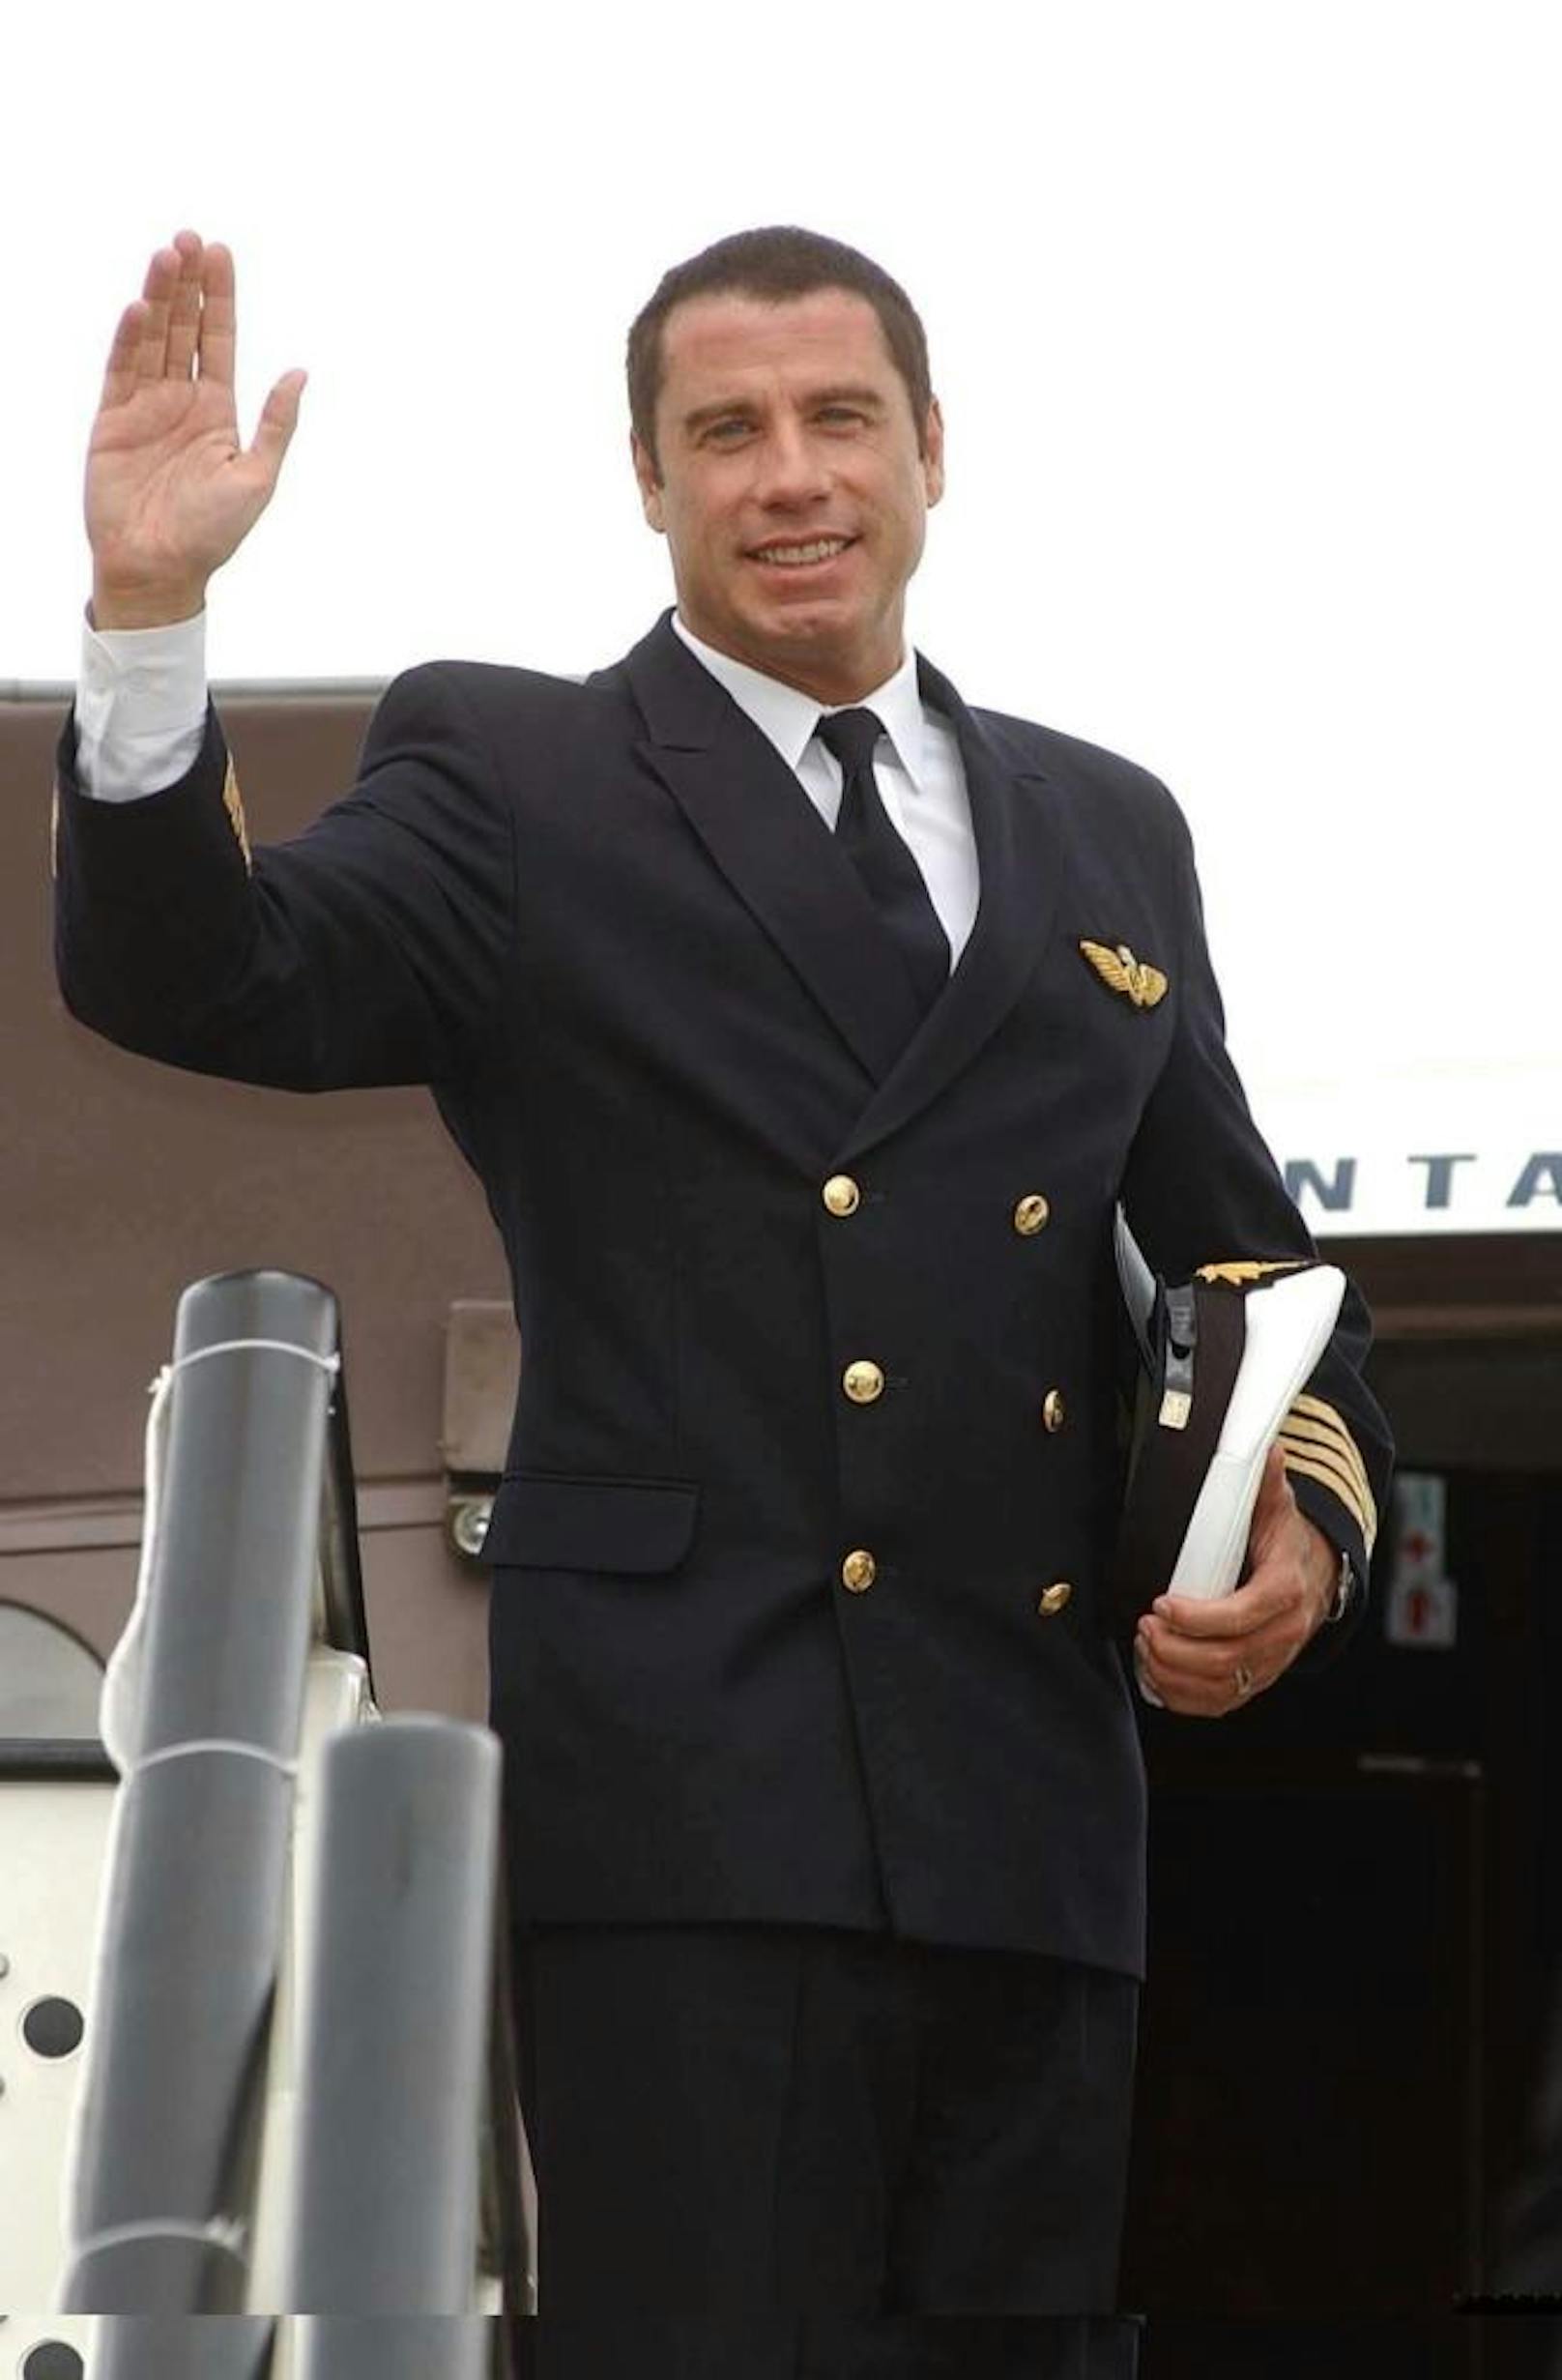 Schauspieler John Travolta sitzt seit Jahrzehnten selbst hinter dem Steuerknüppel.